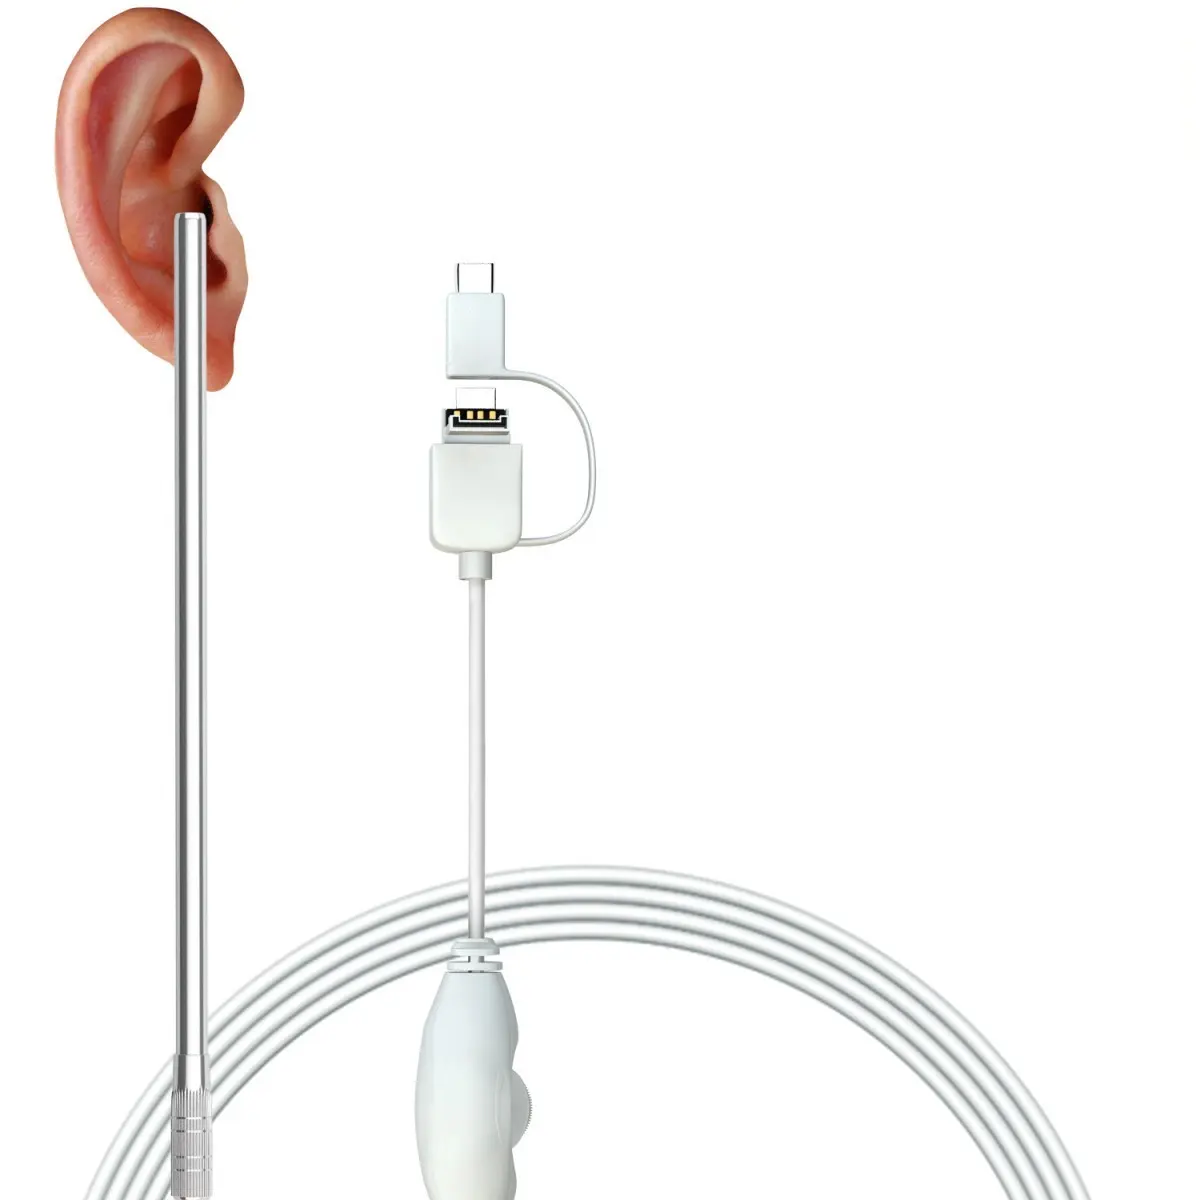 3-in-1 USB&Android&type-c ear pick cleaner edoscope camera HD Visual ear spoon inspection camera endoscopy mini otoscope